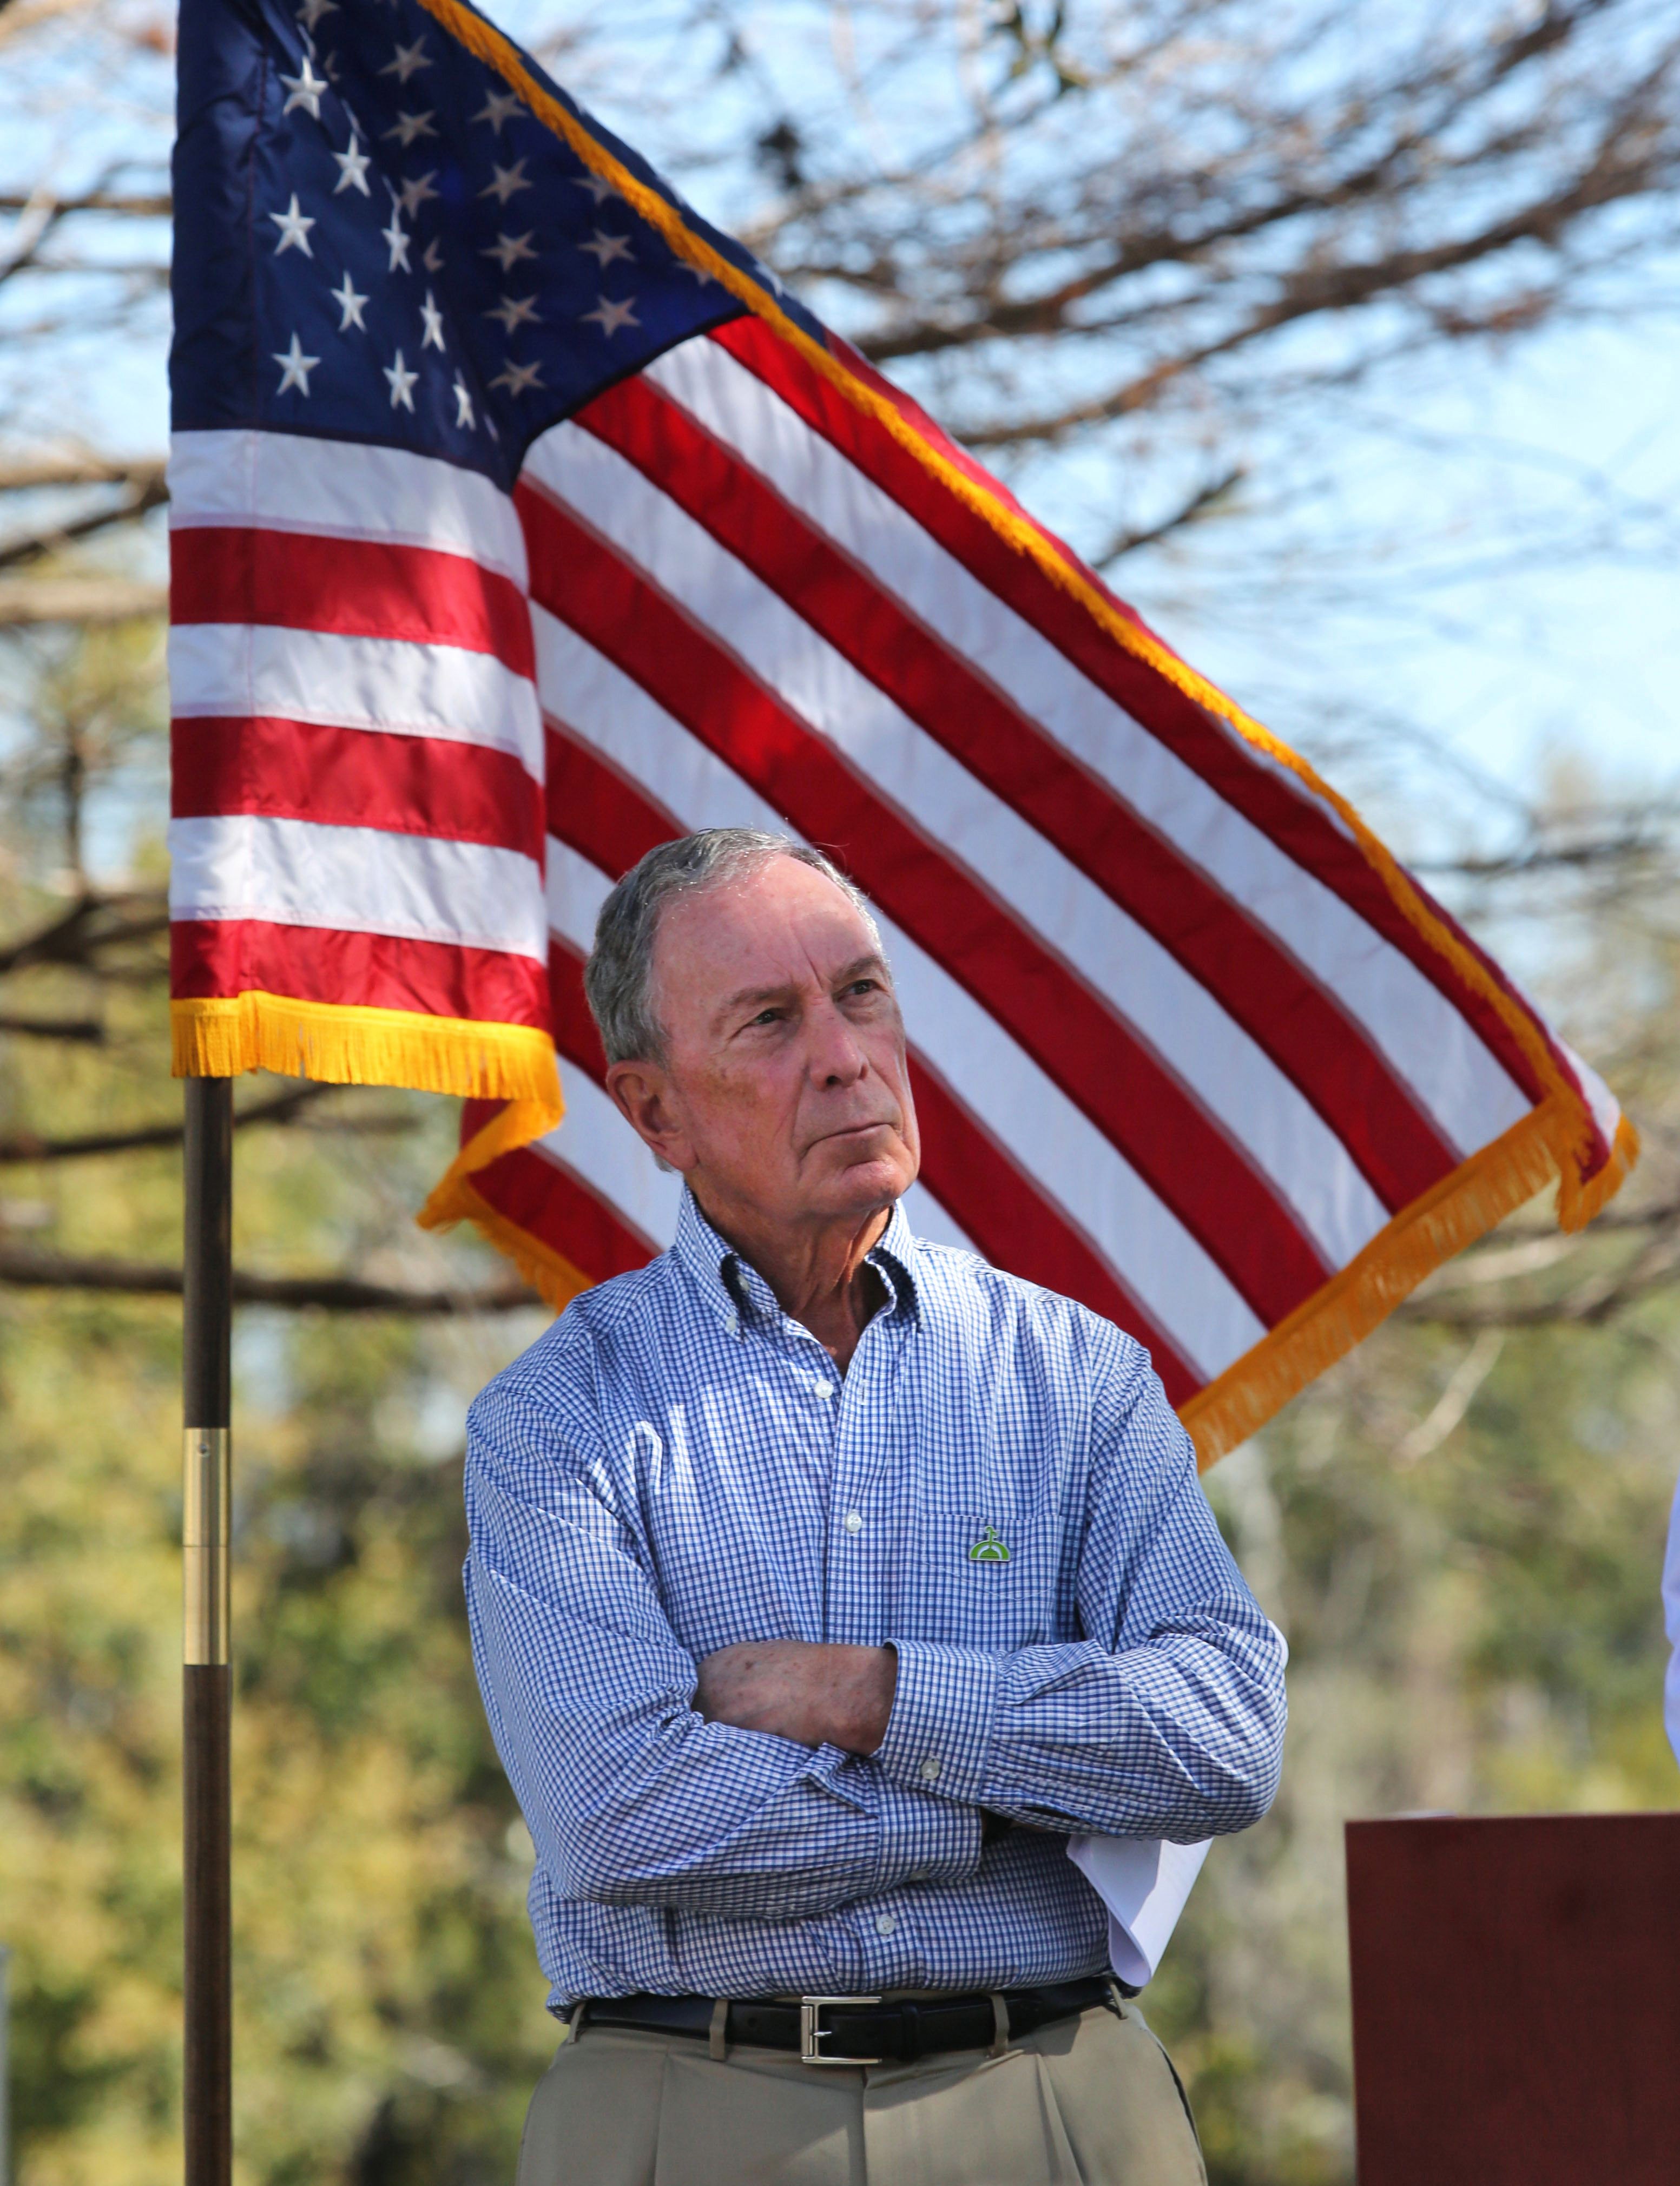 Former New York mayor Michael Bloomberg has signalled renewed interest in running for president. Photo: TNS